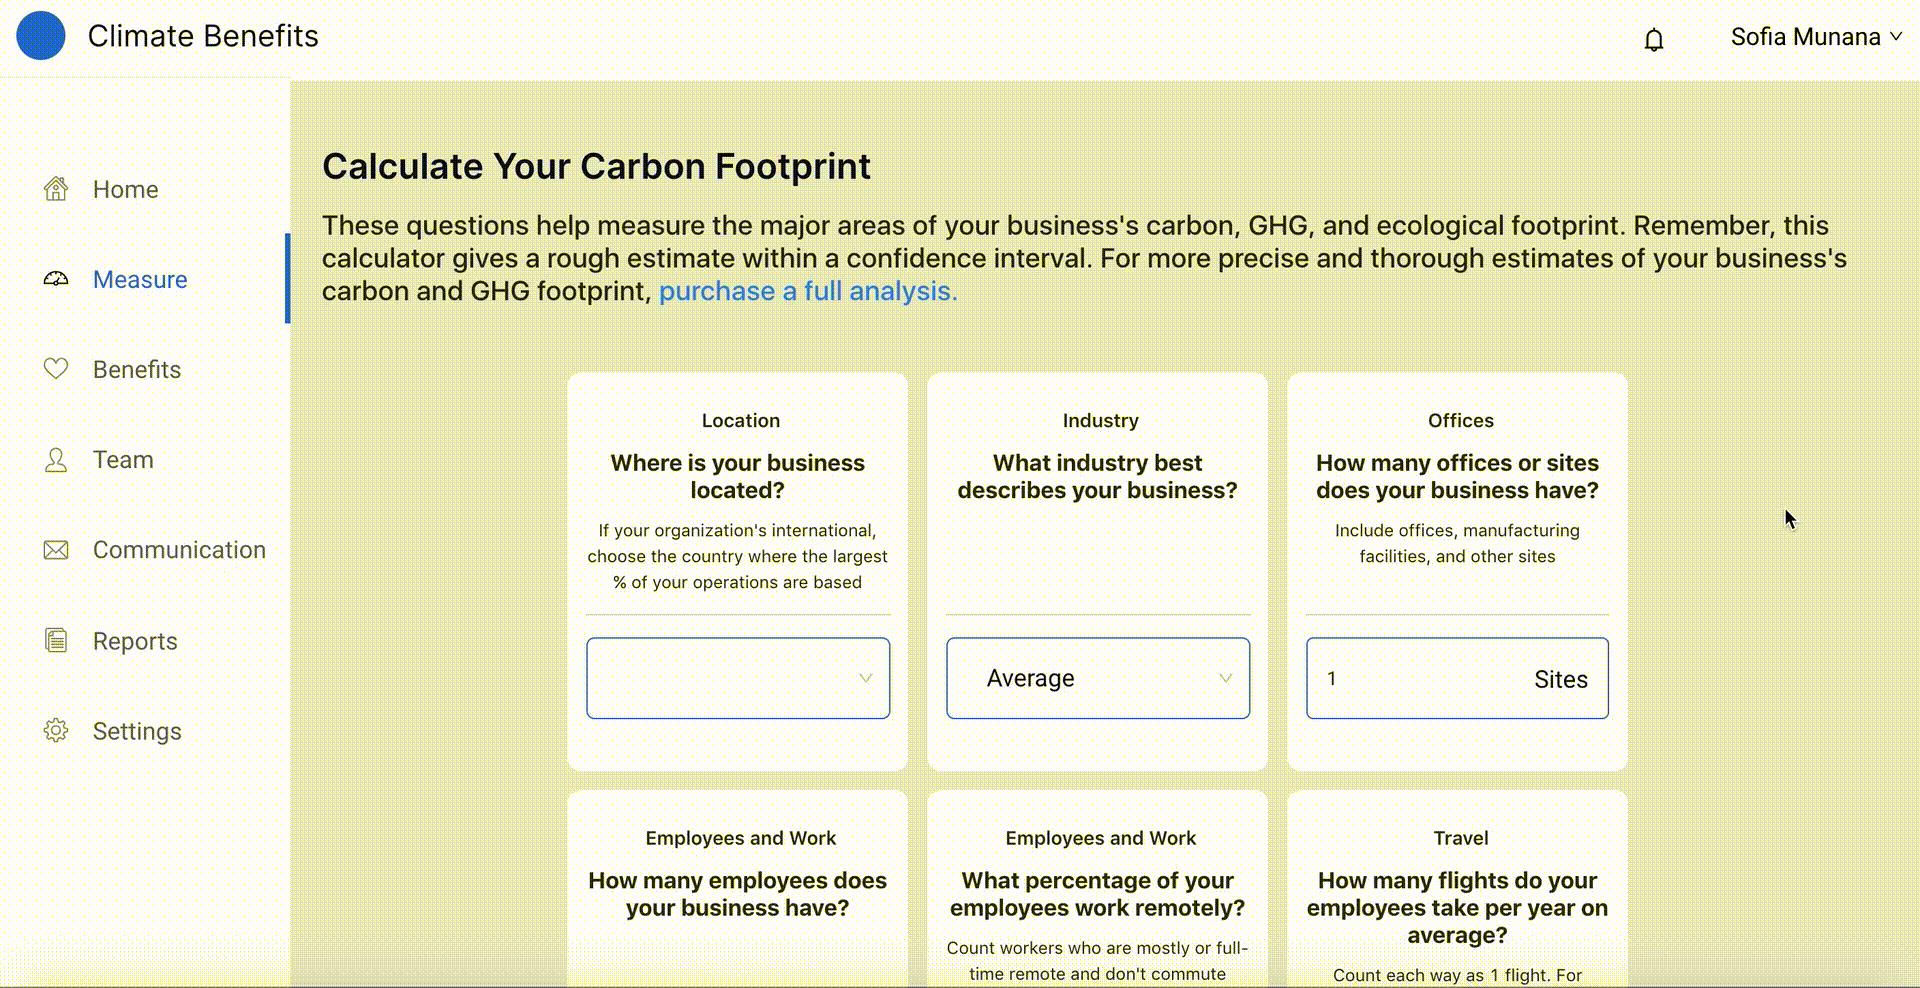 Carbon Footprint Calculator